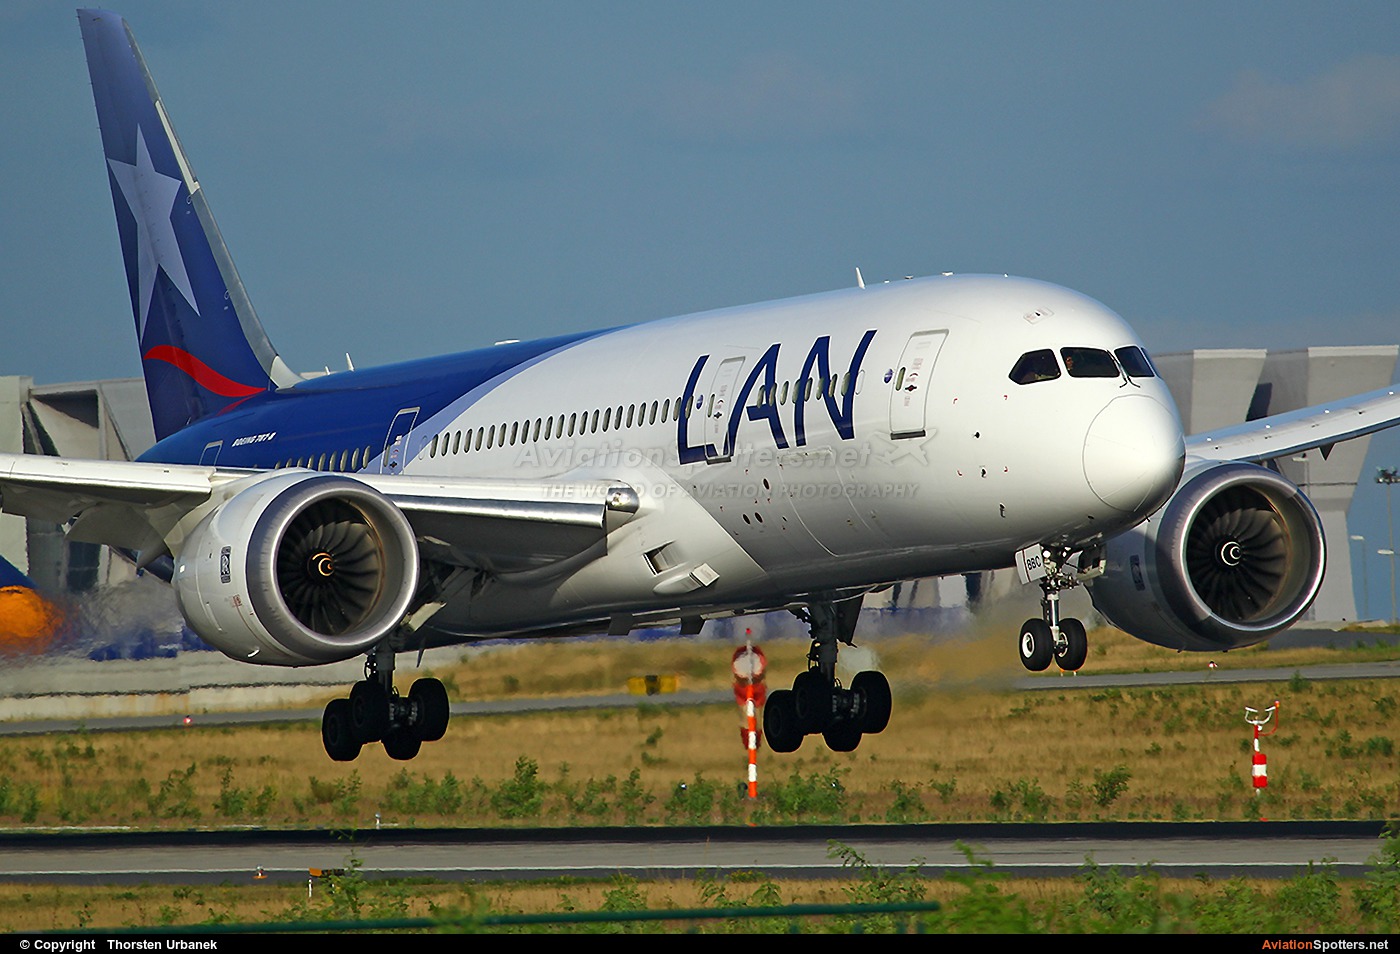 LAN Airlines  -  787-8 Dreamliner  (CC-BBC) By Thorsten Urbanek (toto1973)